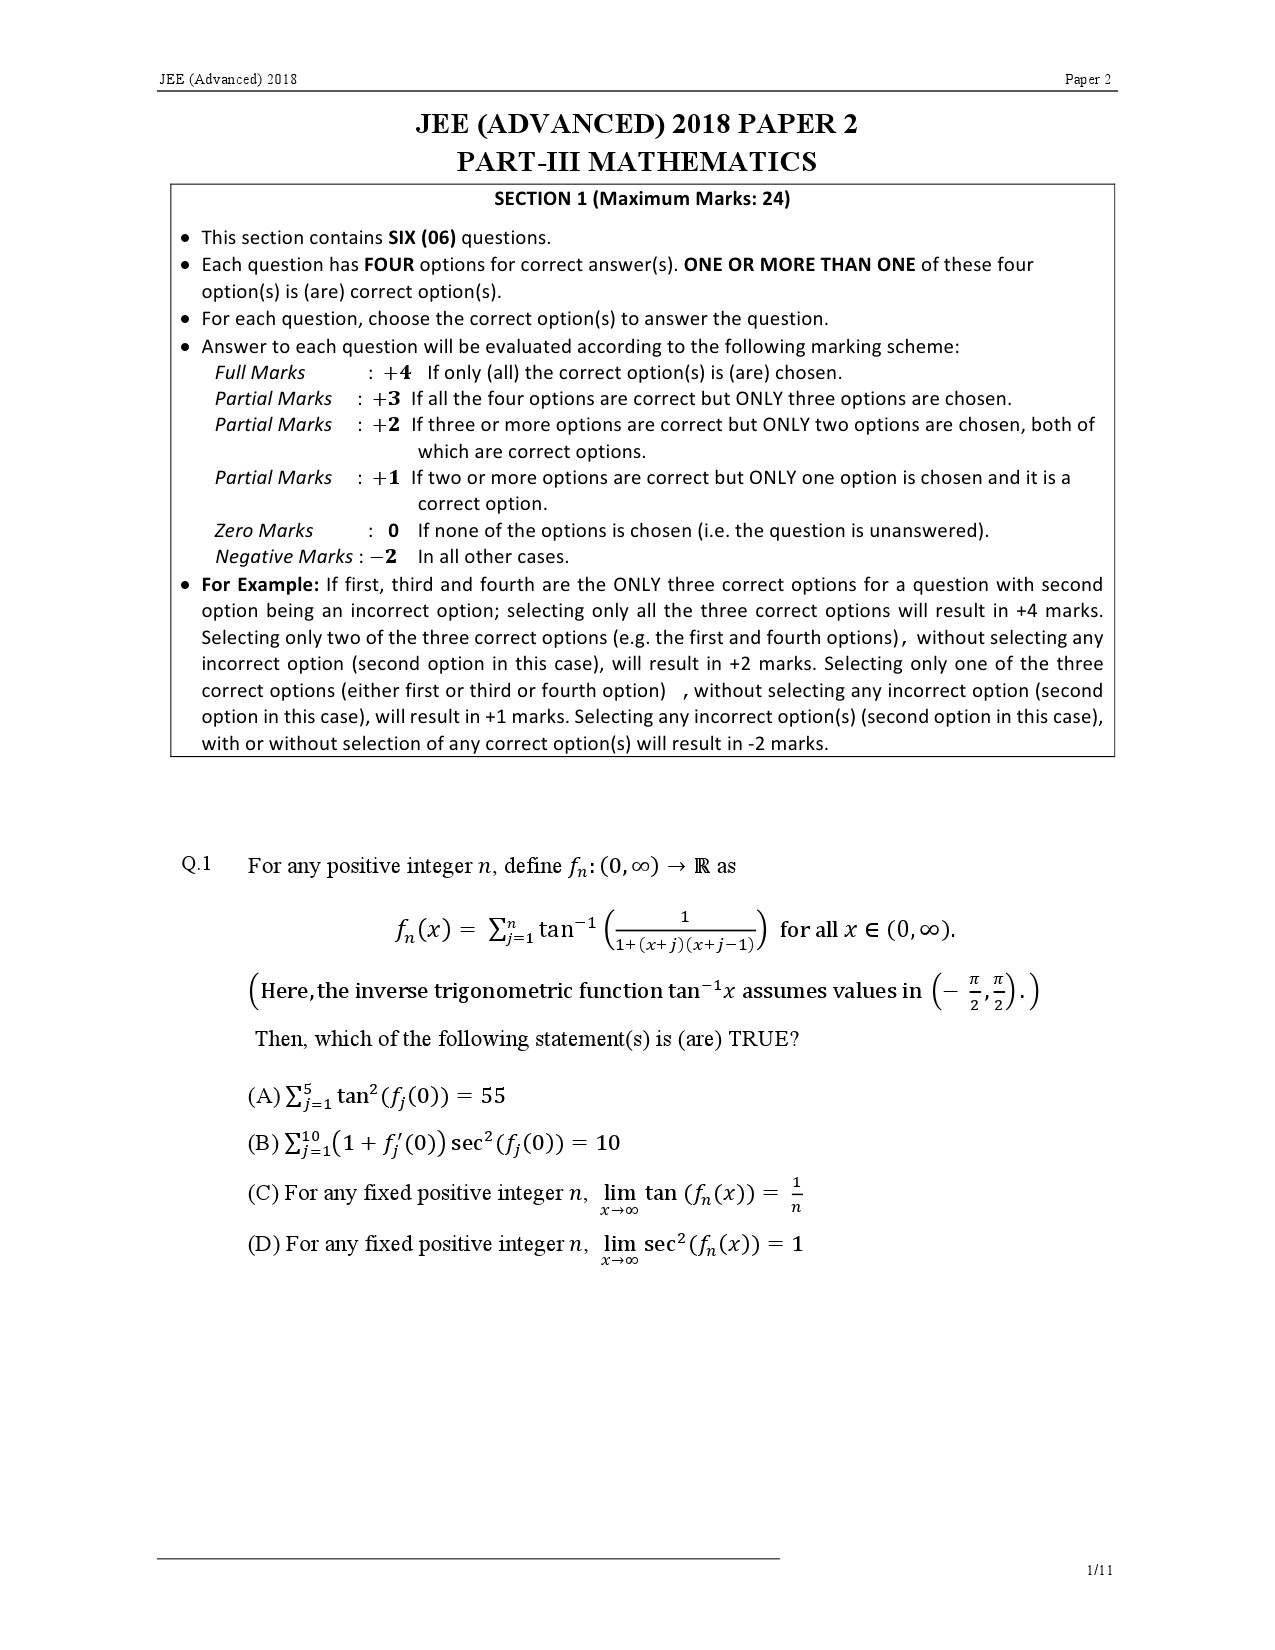 JEE Advanced Exam Question Paper 2018 Paper 2 Mathematics 1